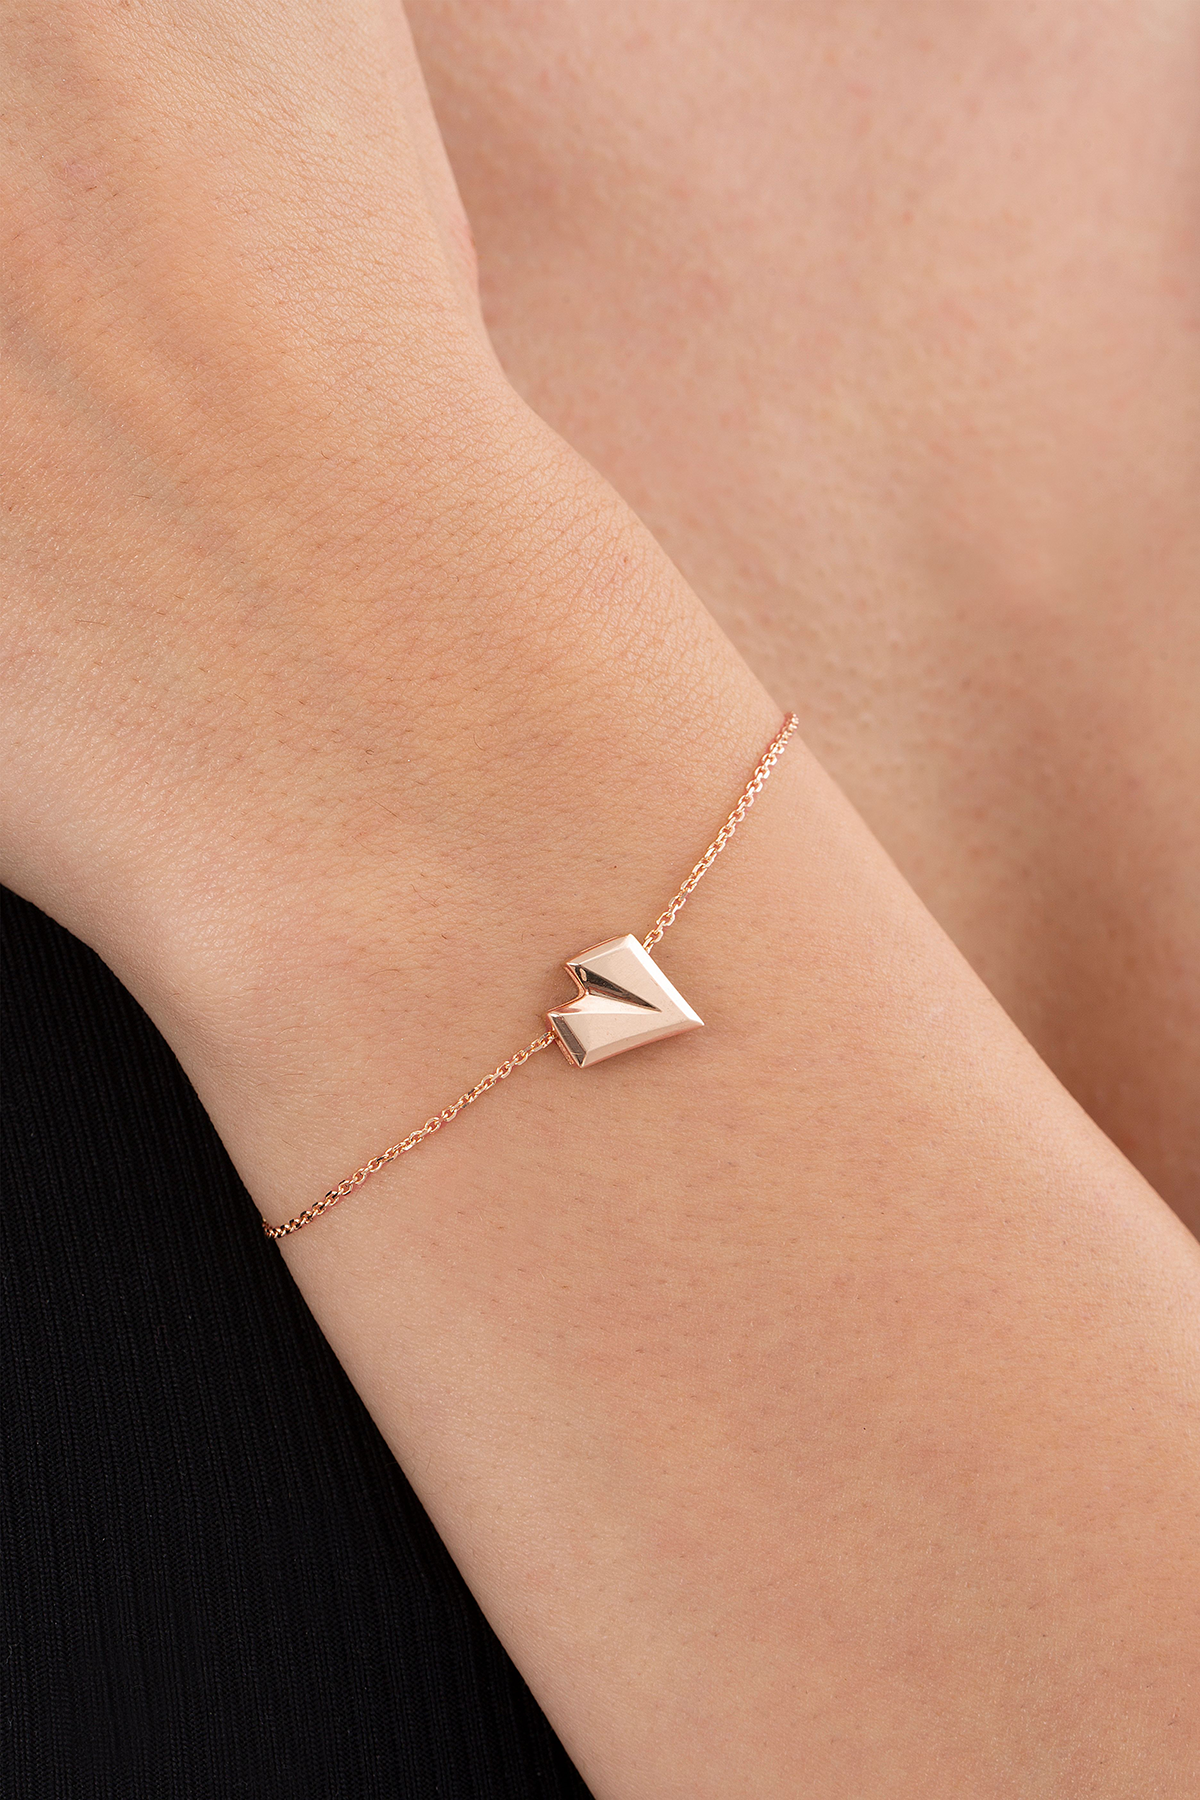 Origami Love Bracelet in Rose Gold - Her Story Shop